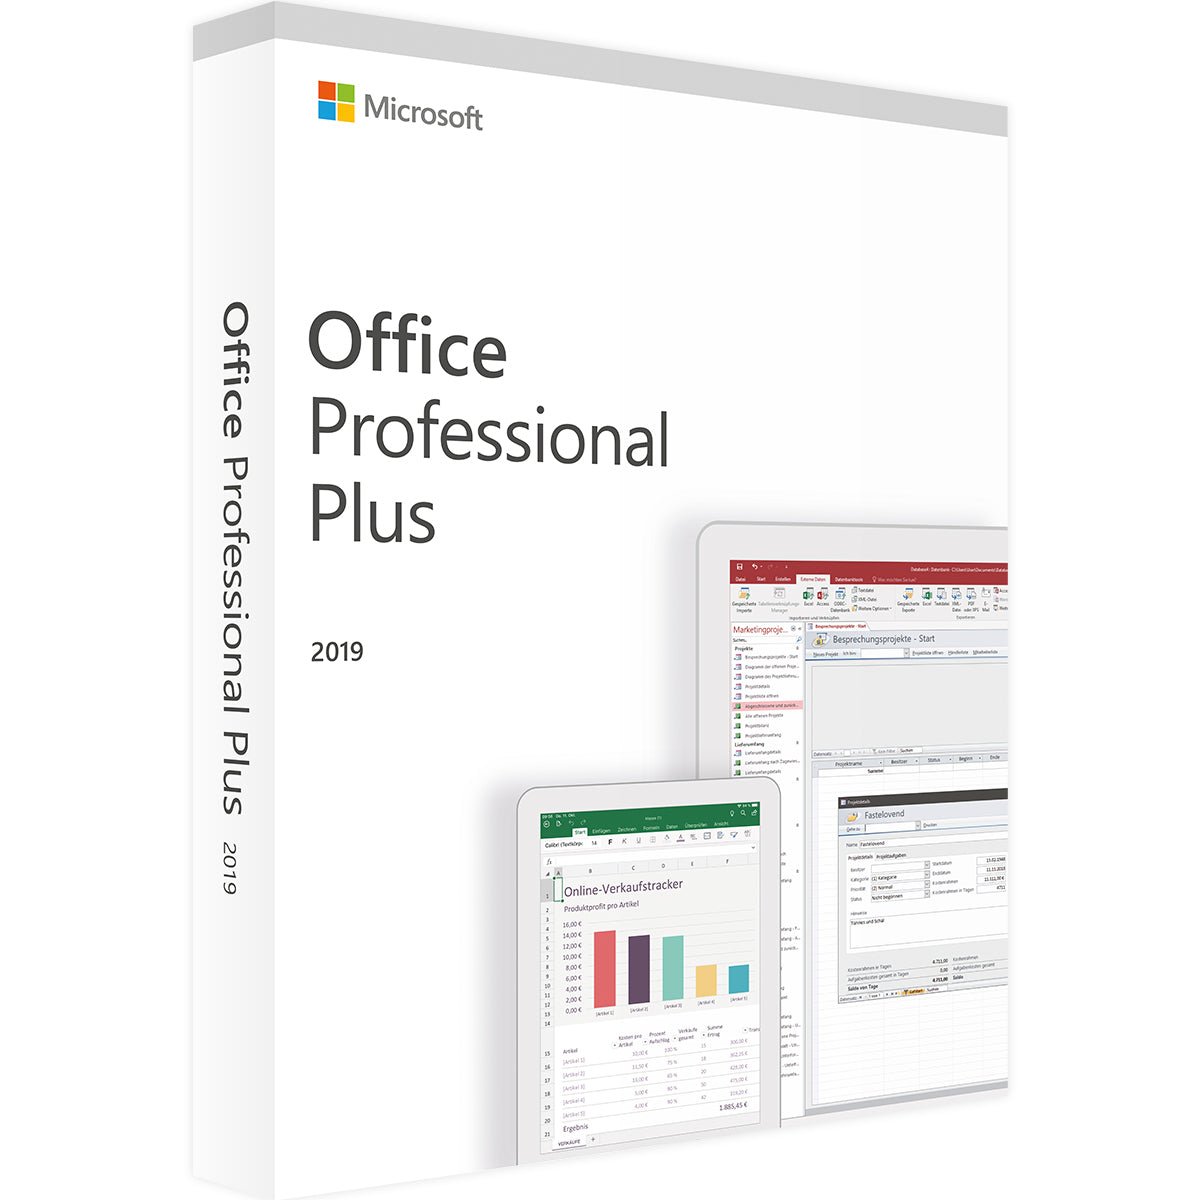 Microsoft Office Professional 2019 til Windows - officepakke.dkMicrosoft Office Professional 2019 til Windowsofficepakke.dkofficepakke.dk